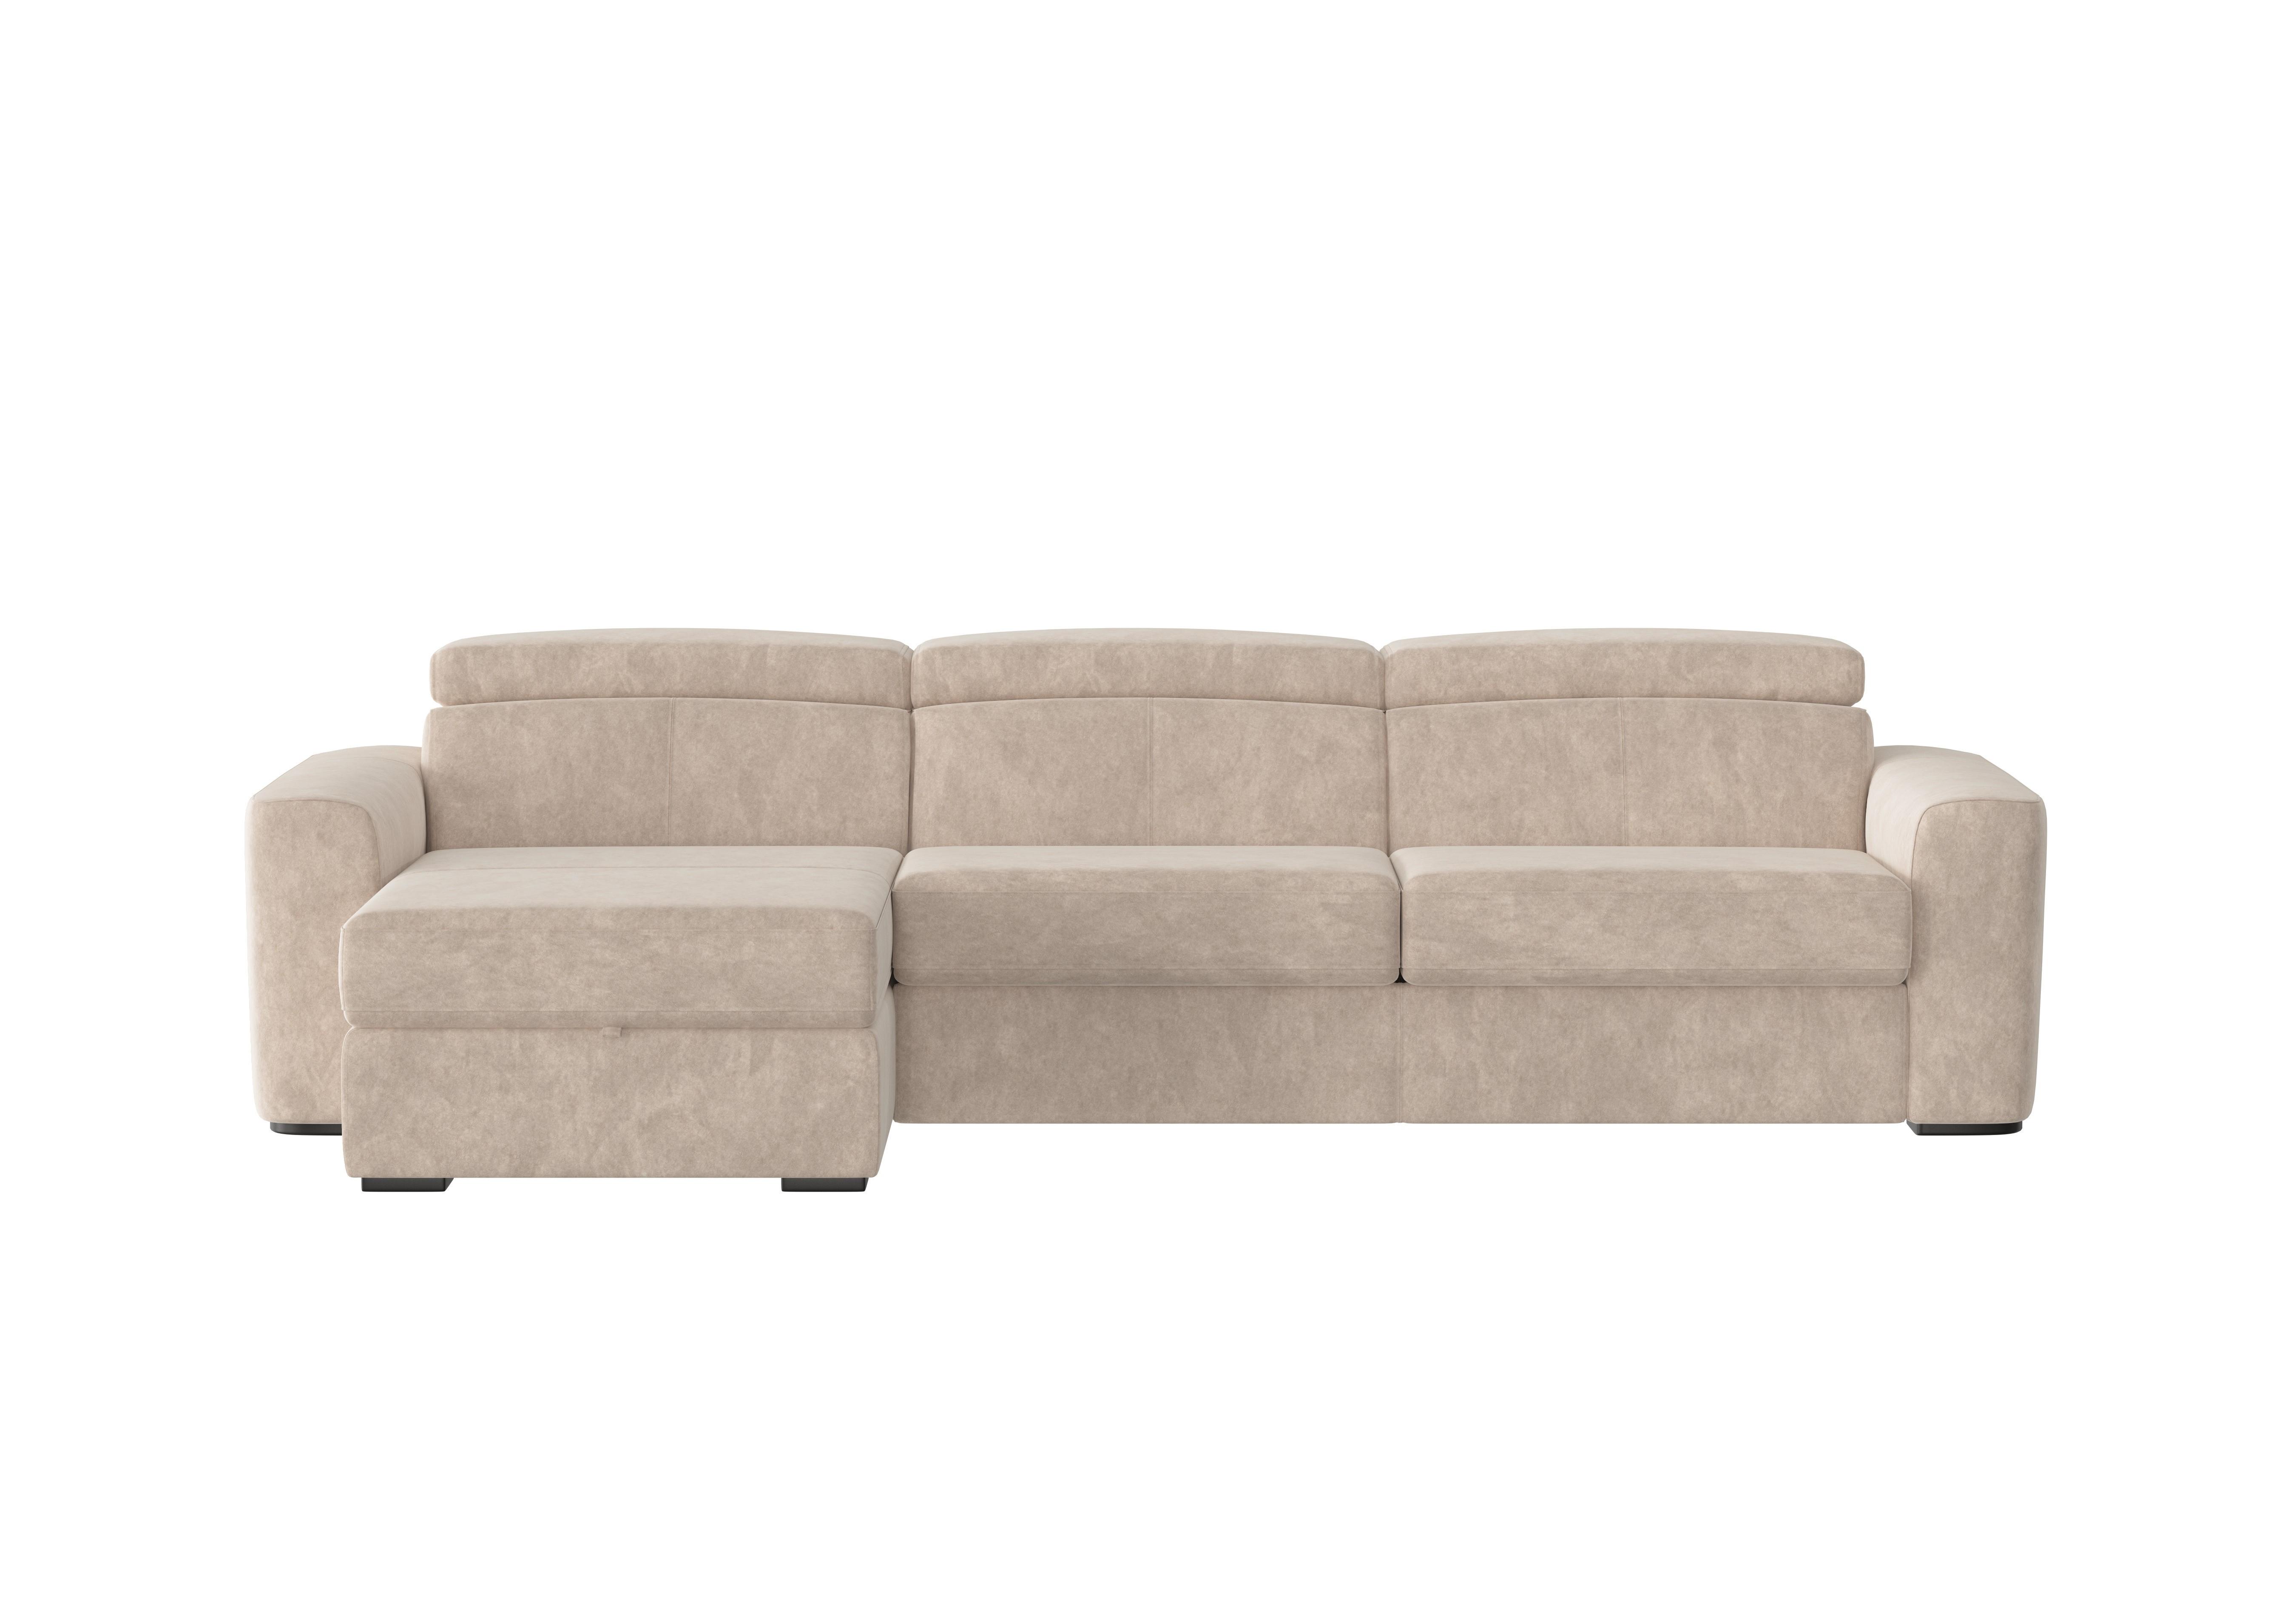 Infinity Fabric Corner Chaise Sofa with Storage in Bfa-Bnn-R26 Fv2 Cream on Furniture Village